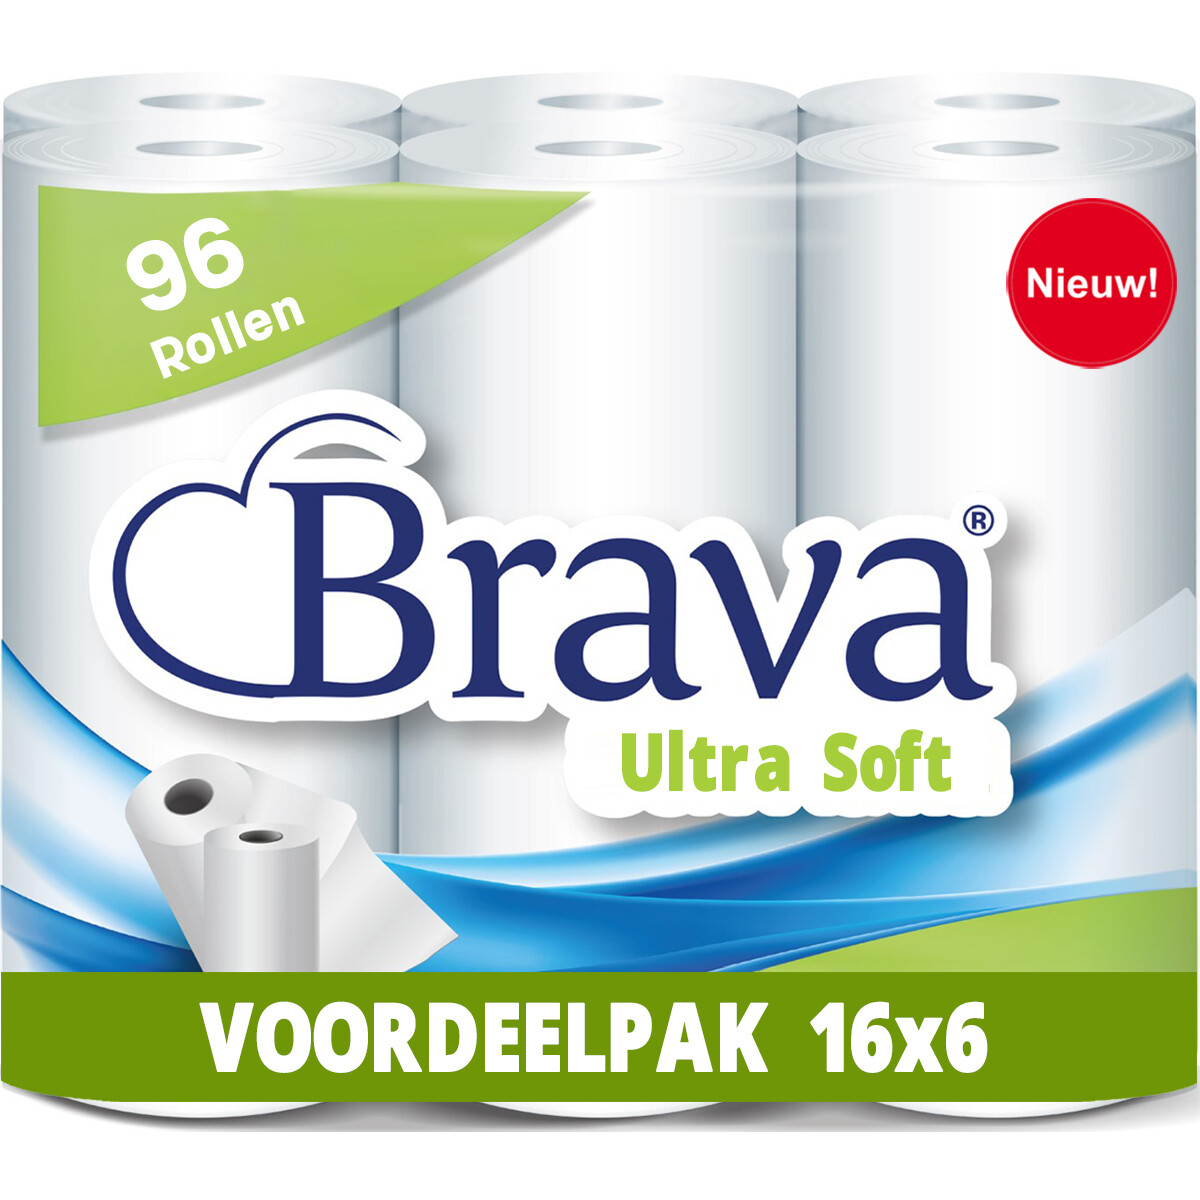 Brava - Super Keukenpapier - 96 Rollen - Ultra Absorberend Keukenpapier - Ultra Clean Keukenrol - Voordeelverpakking